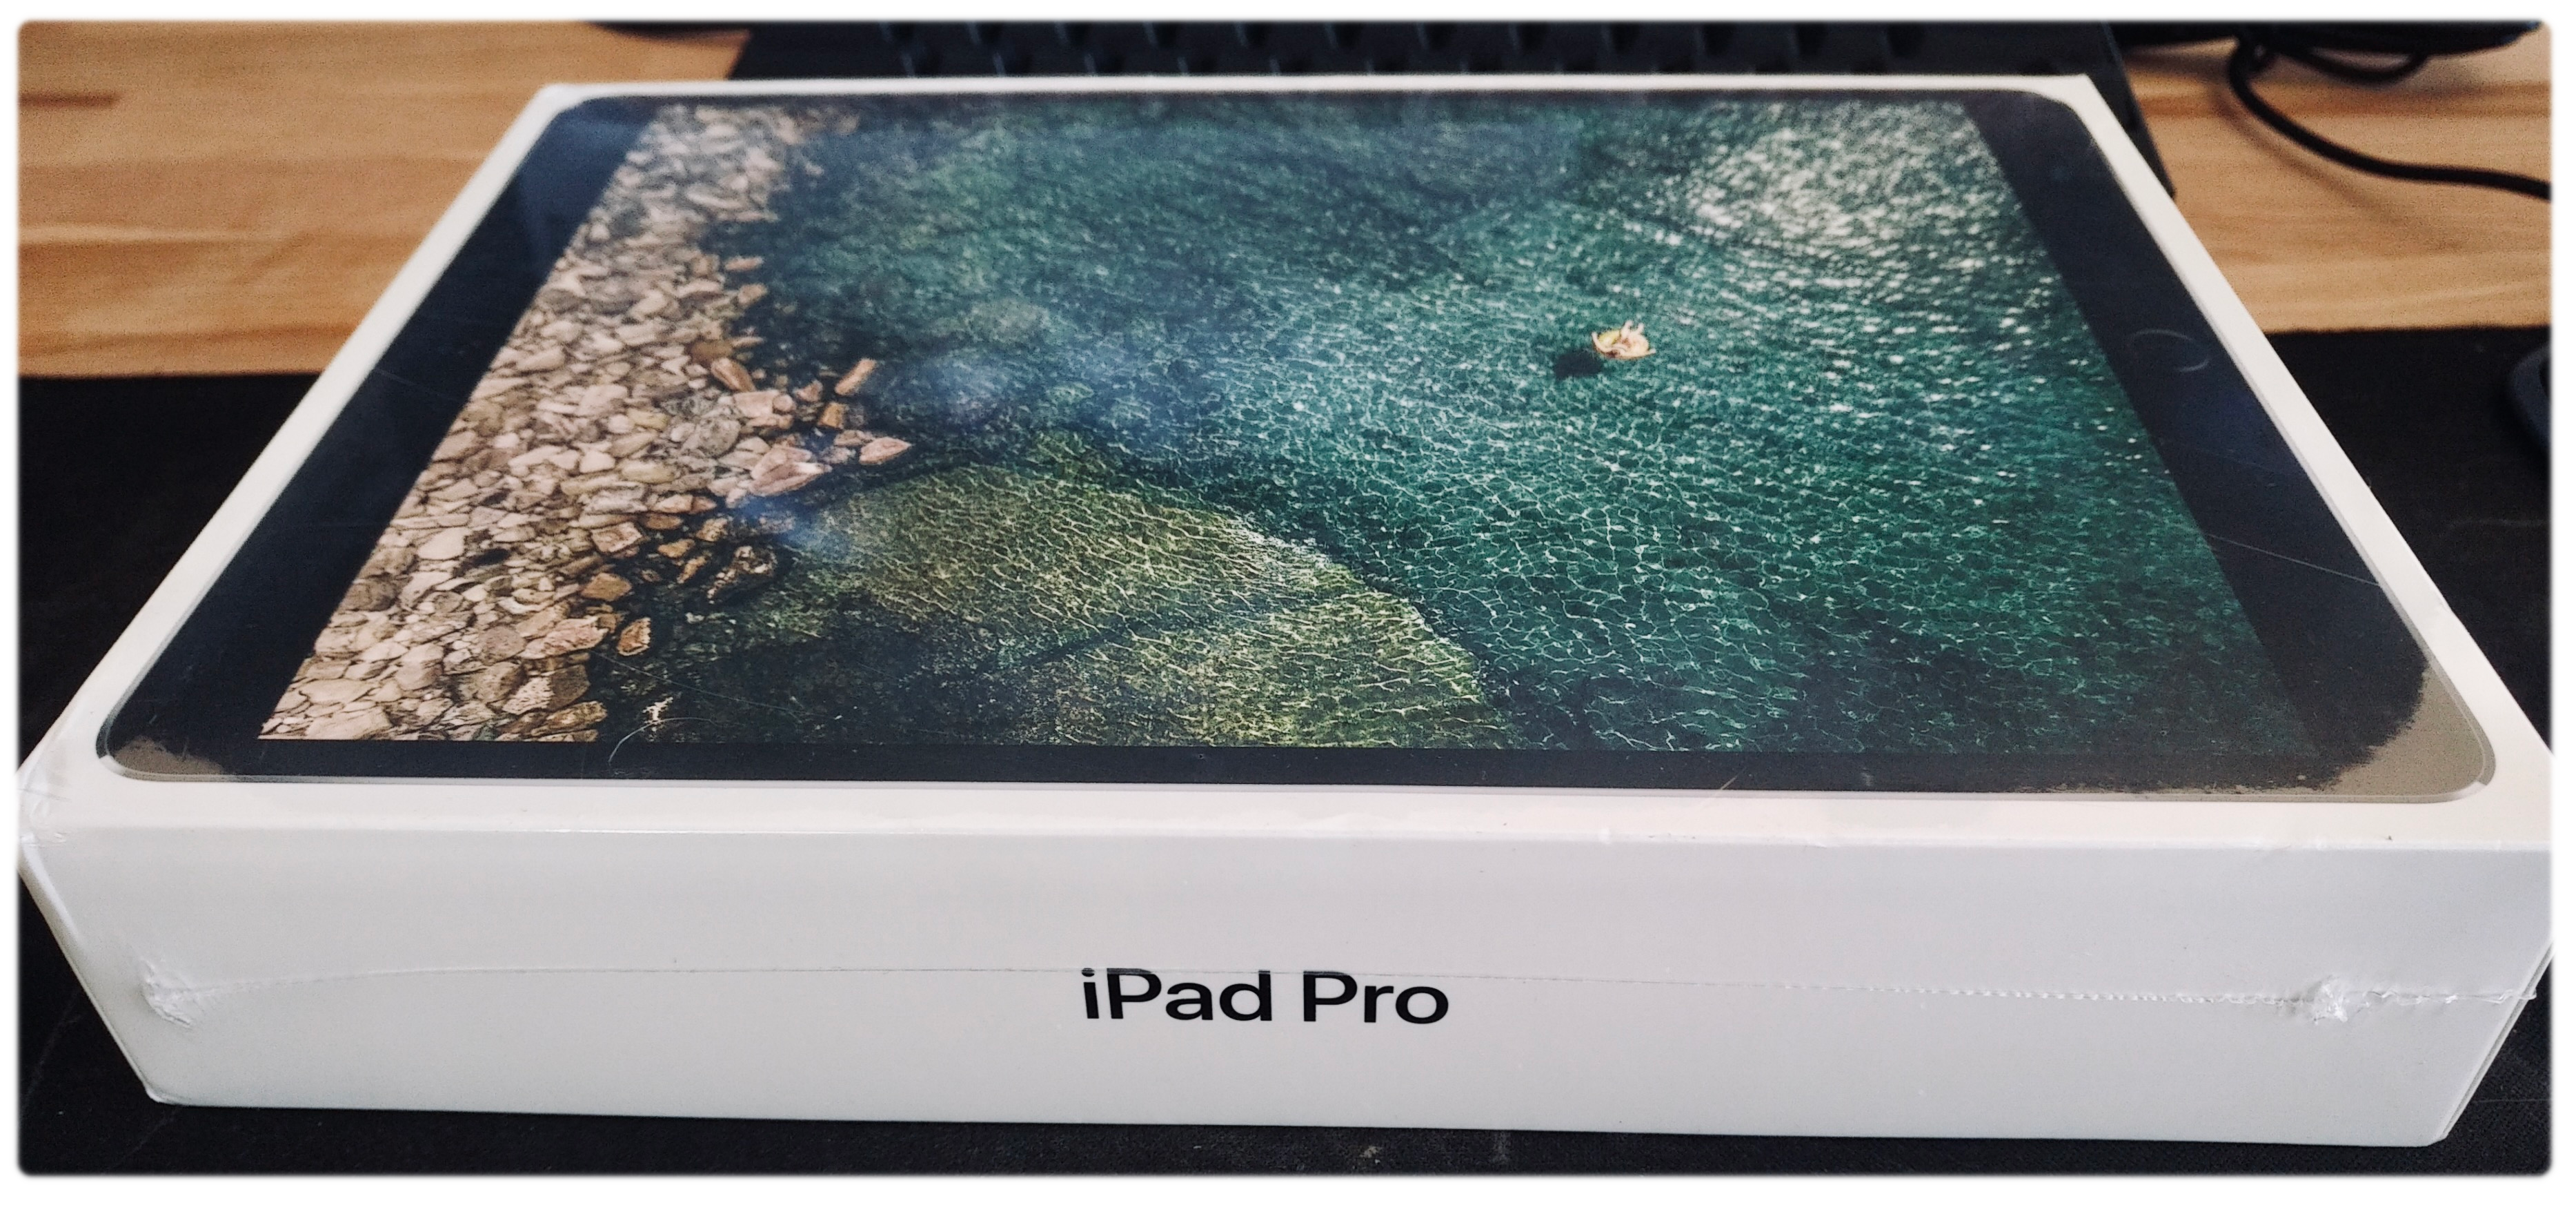 The box of my 10.5 iPad Pro